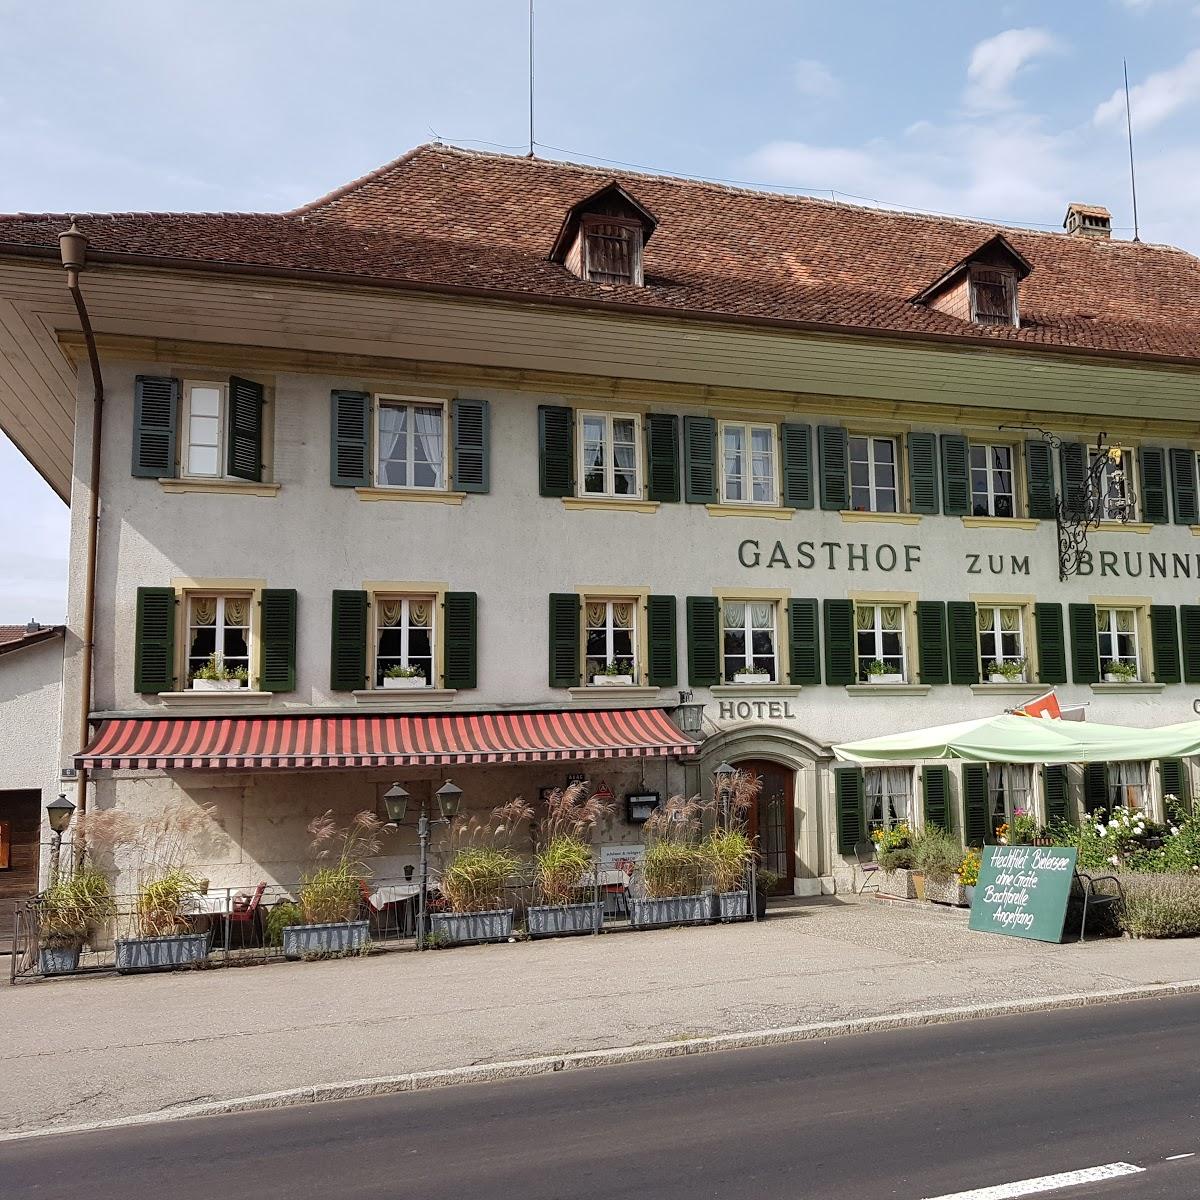 Restaurant "Suure Mocke" in Fraubrunnen